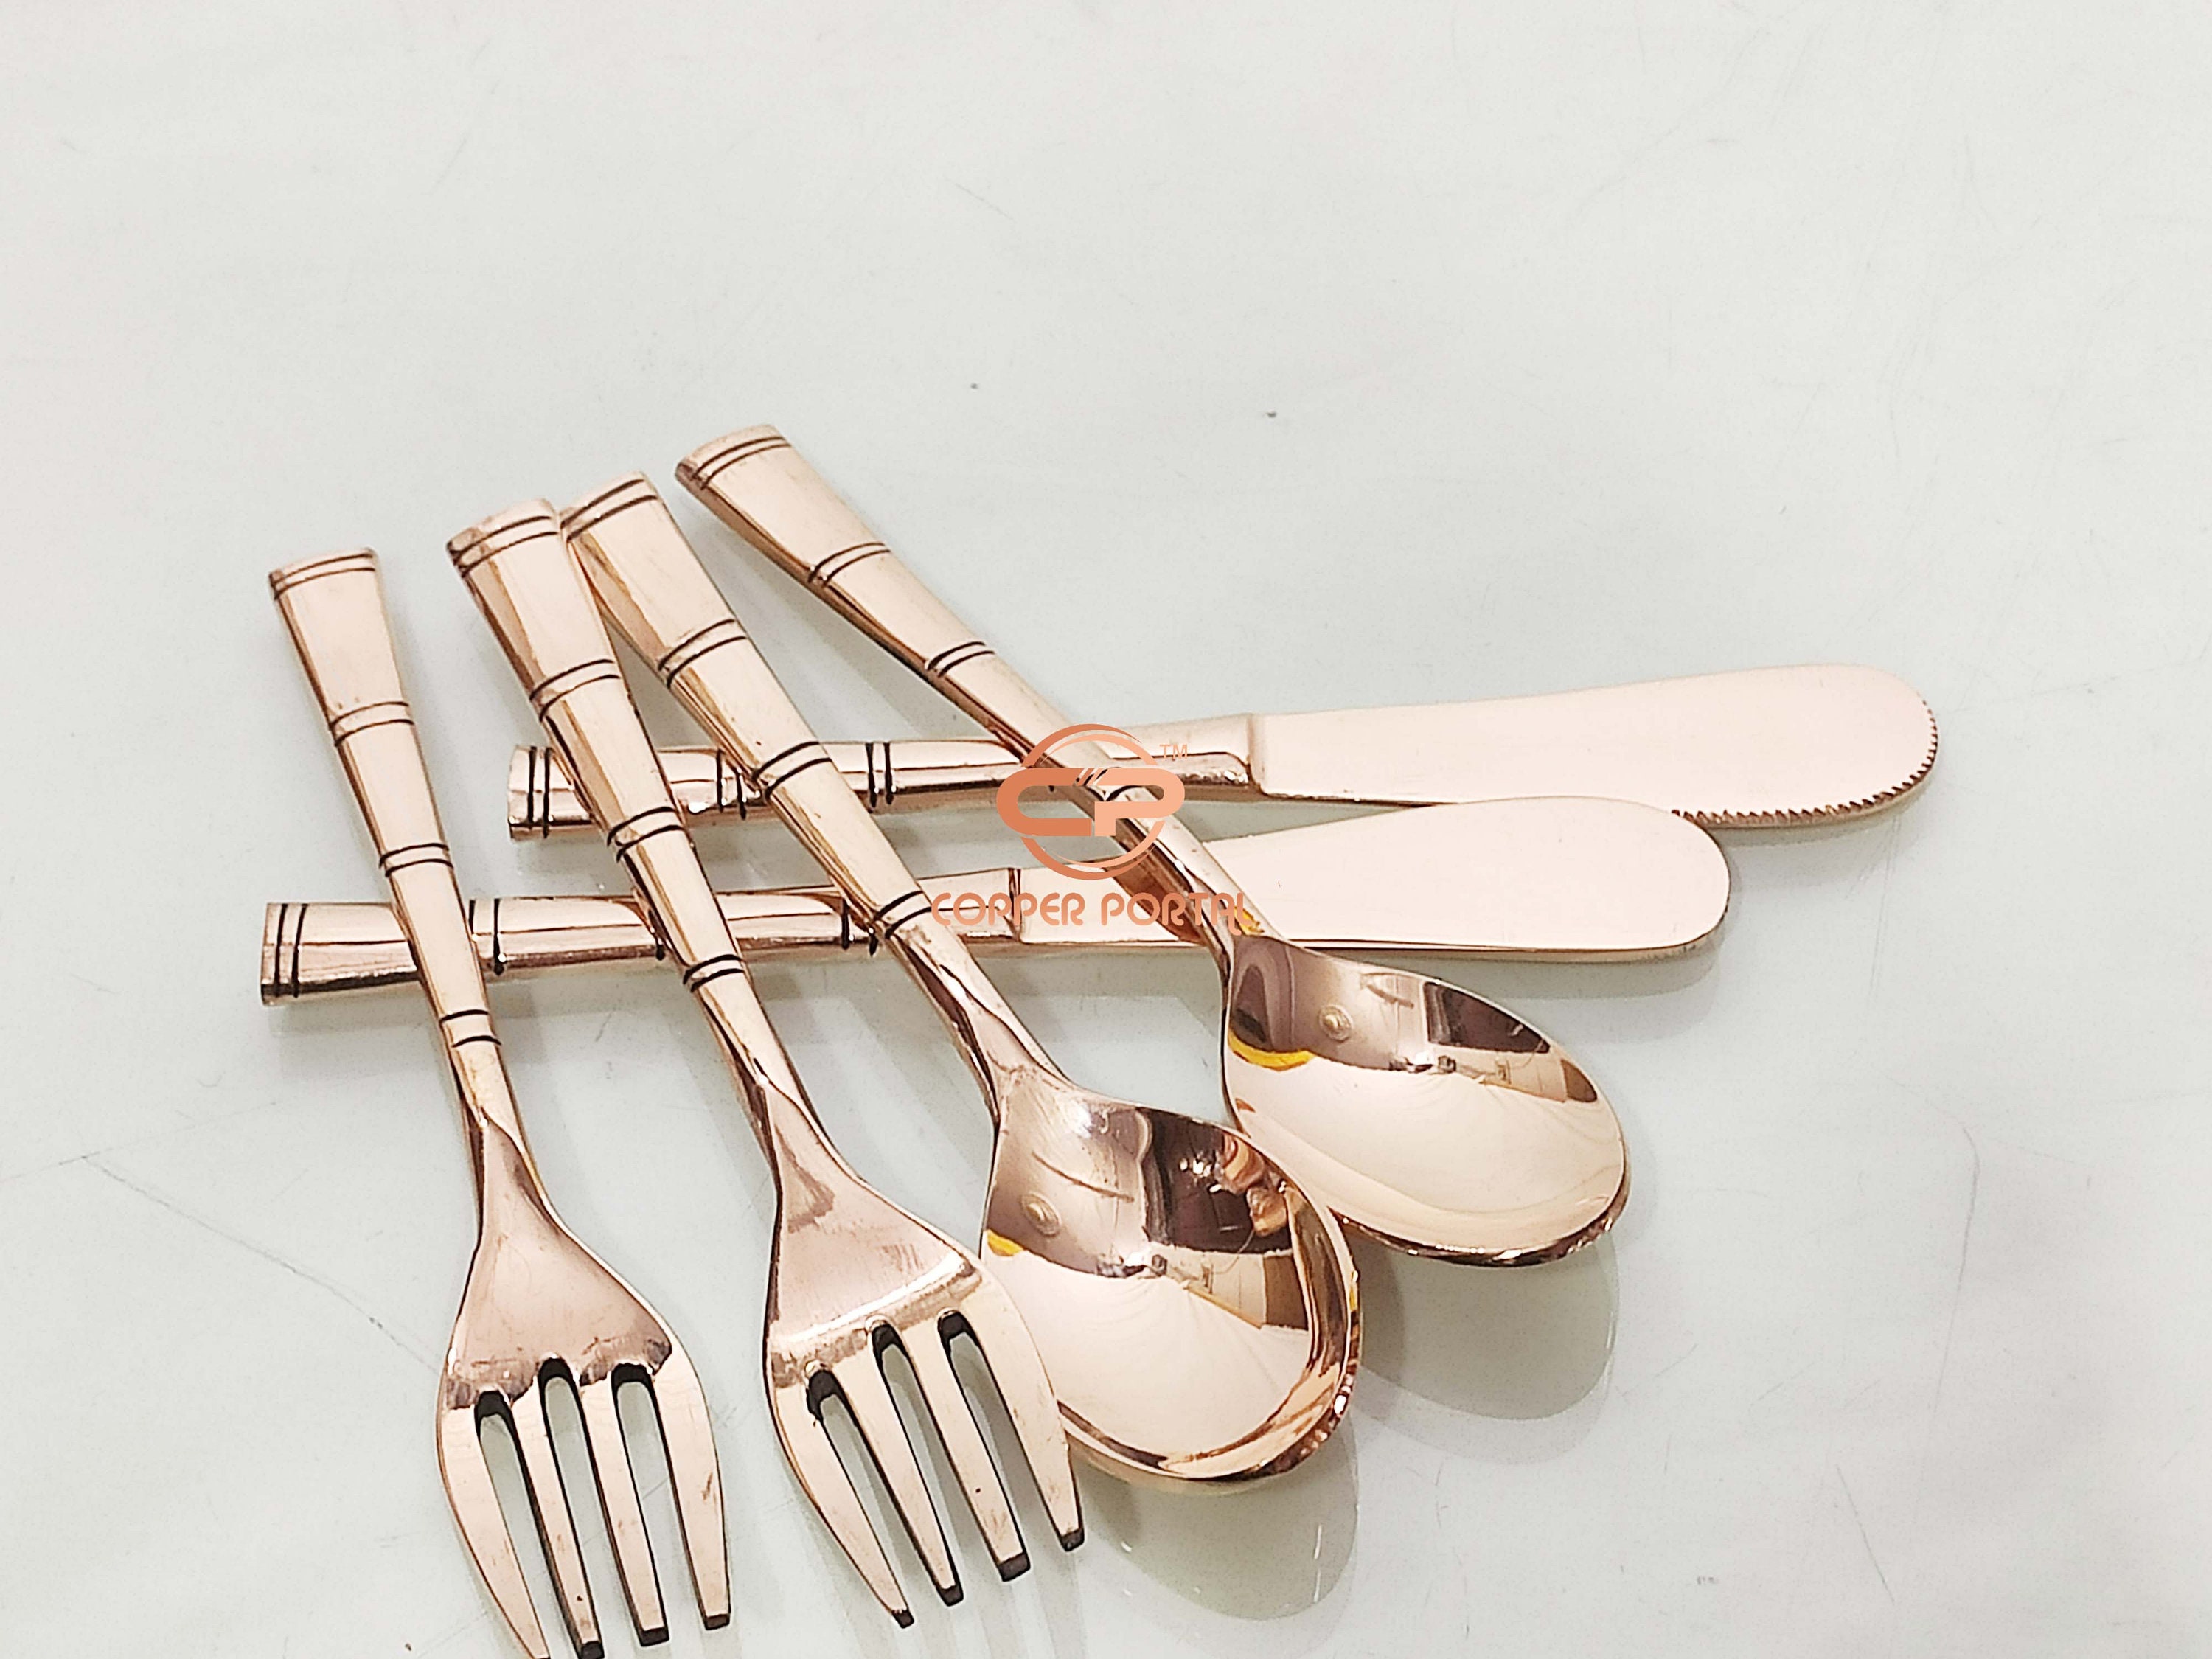 Copper & Marble 10-Piece Cutlery Set